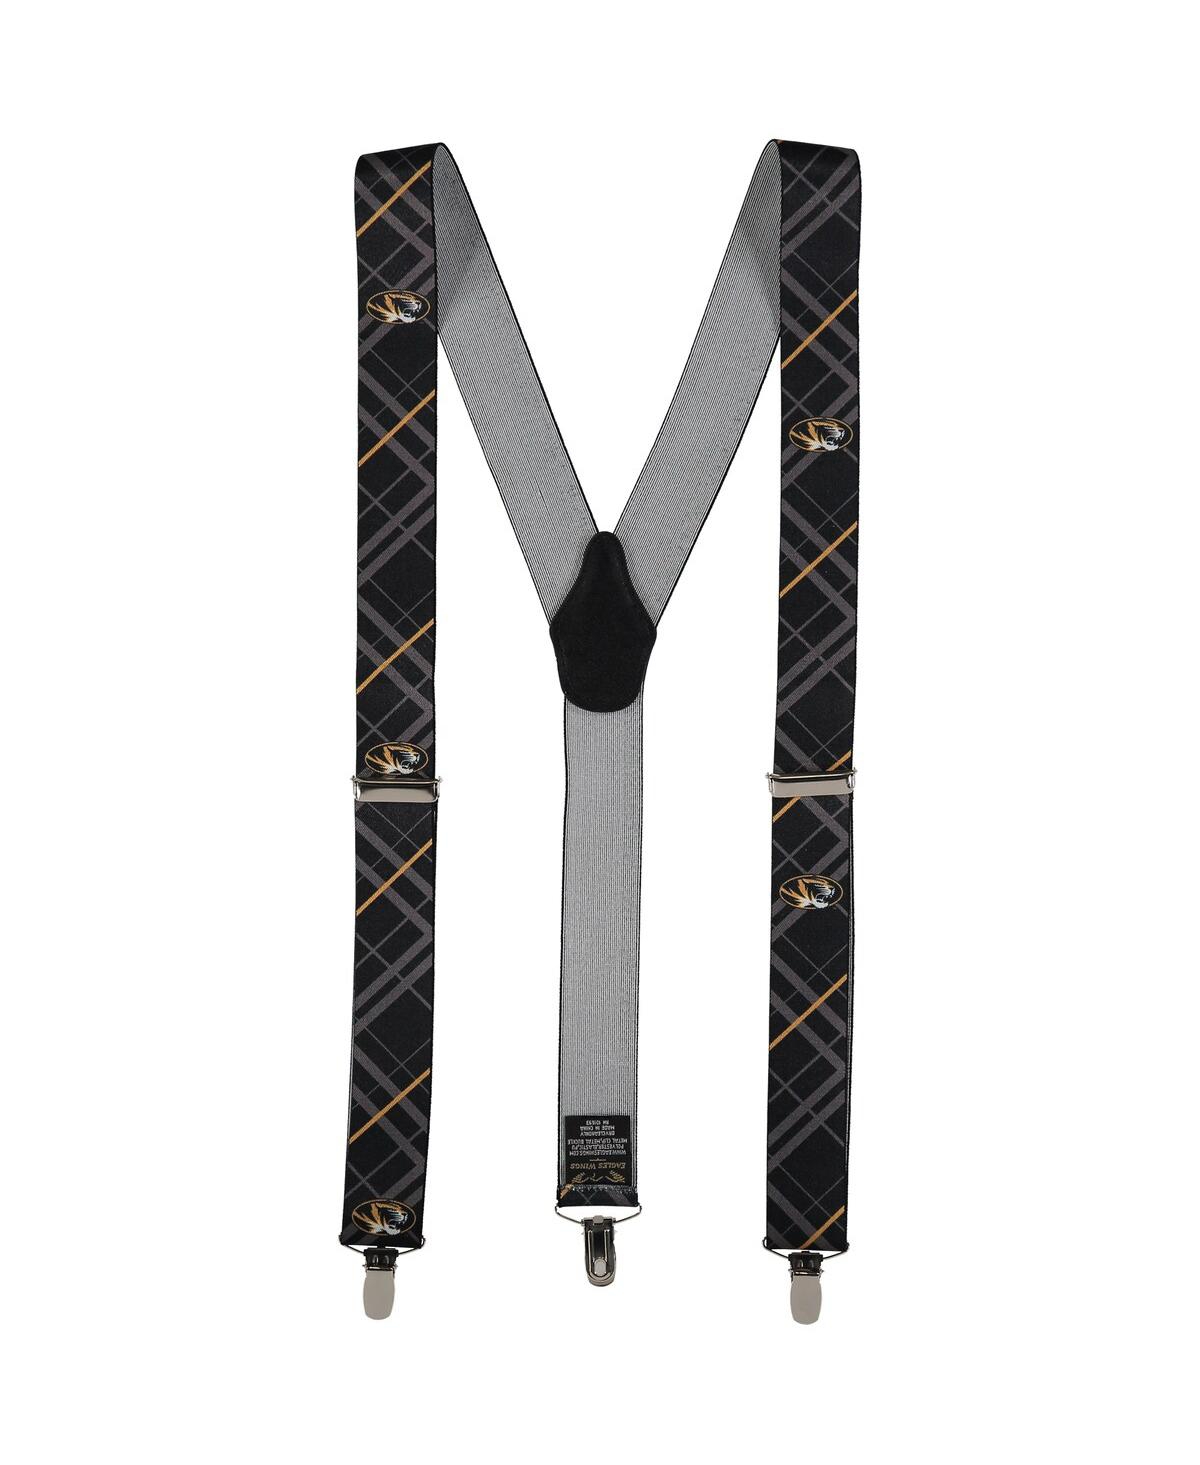 Men's Missouri Tigers Suspenders - Black